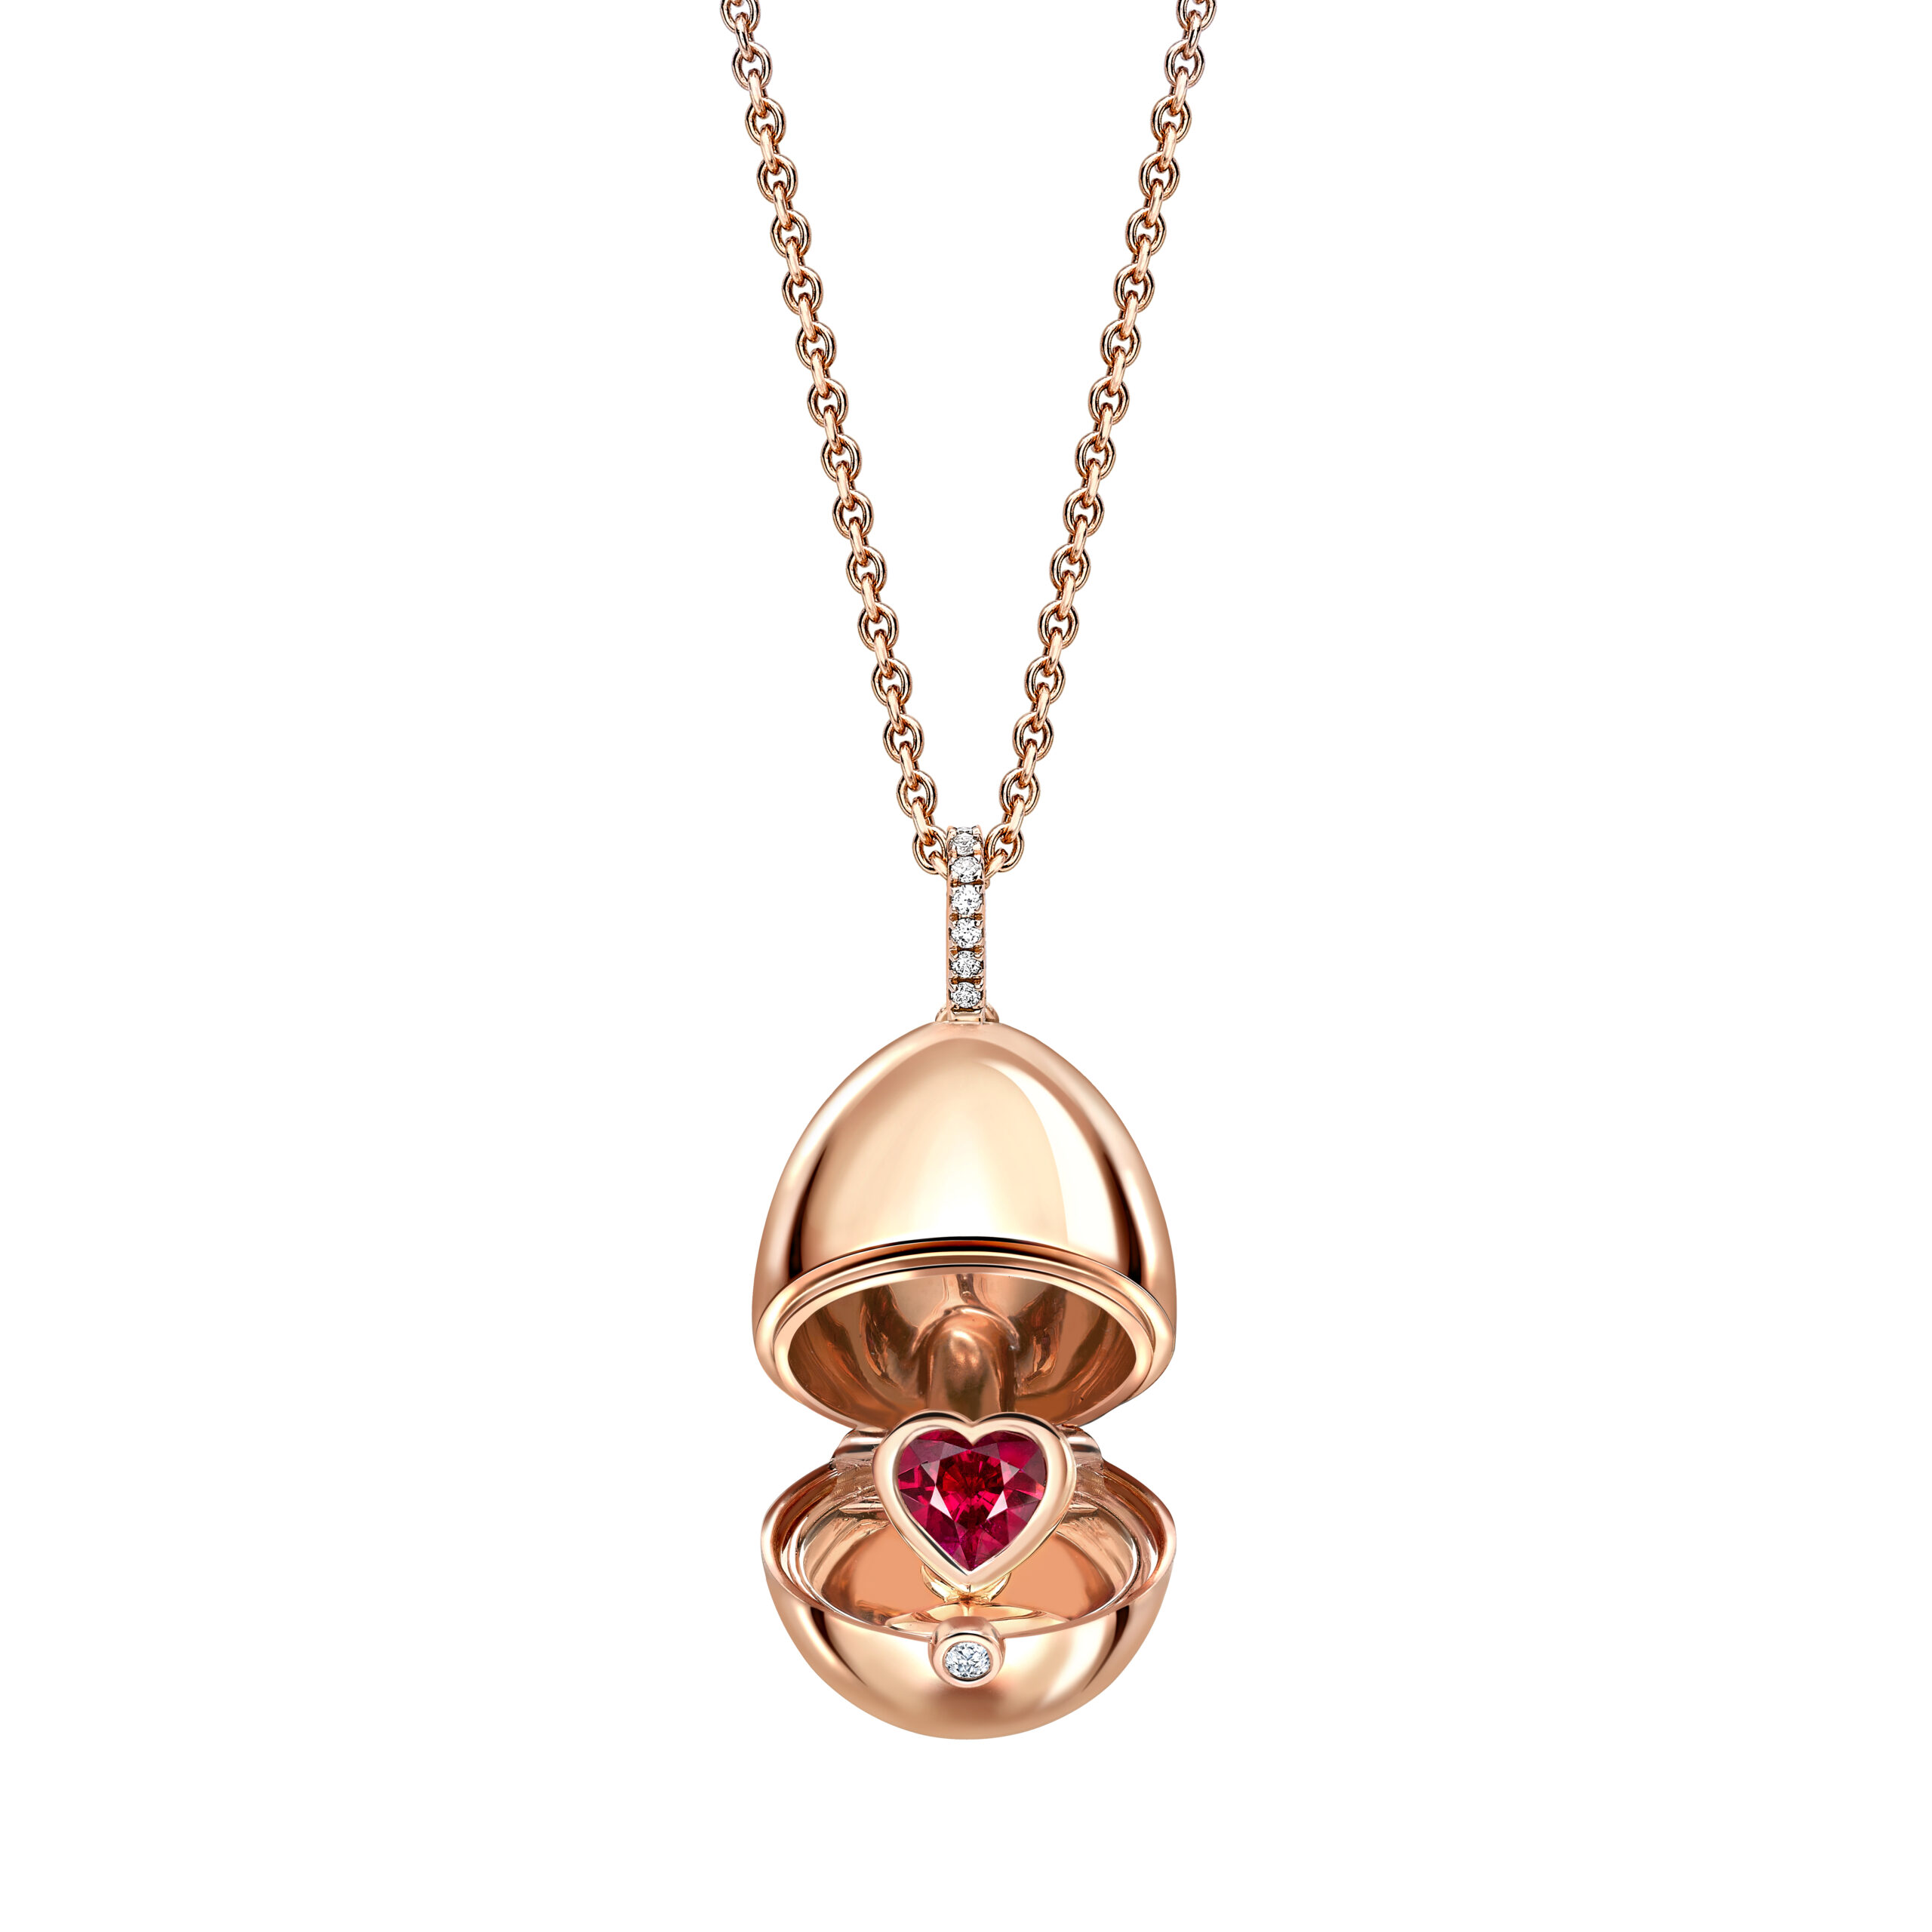 Fabergé Essence Rose Gold & Ruby Heart Surprise Egg Necklace